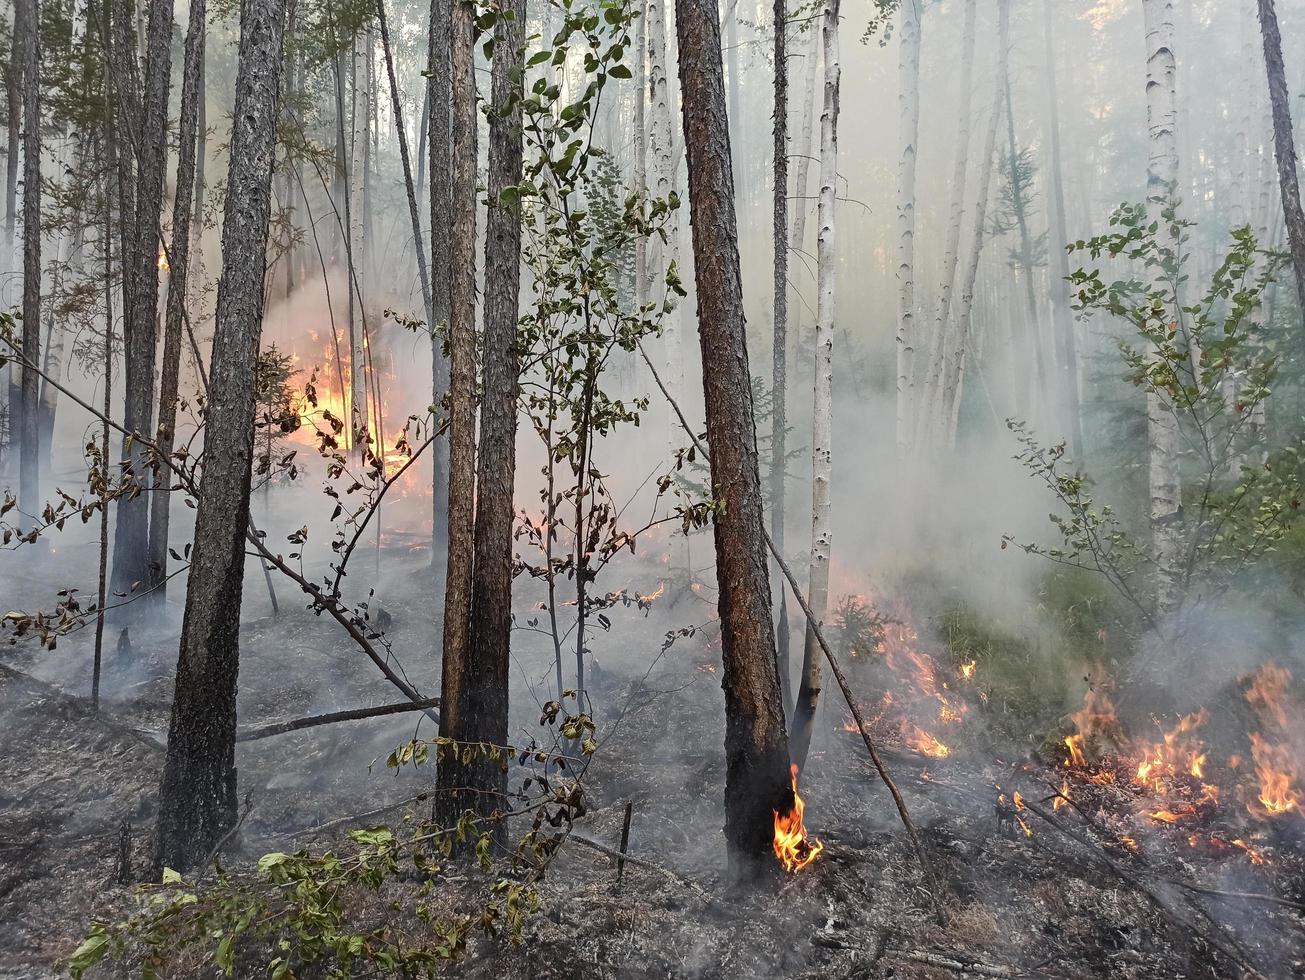 incendio forestal. quema de bosques en yakutia. peligroso natural espontáneo foto